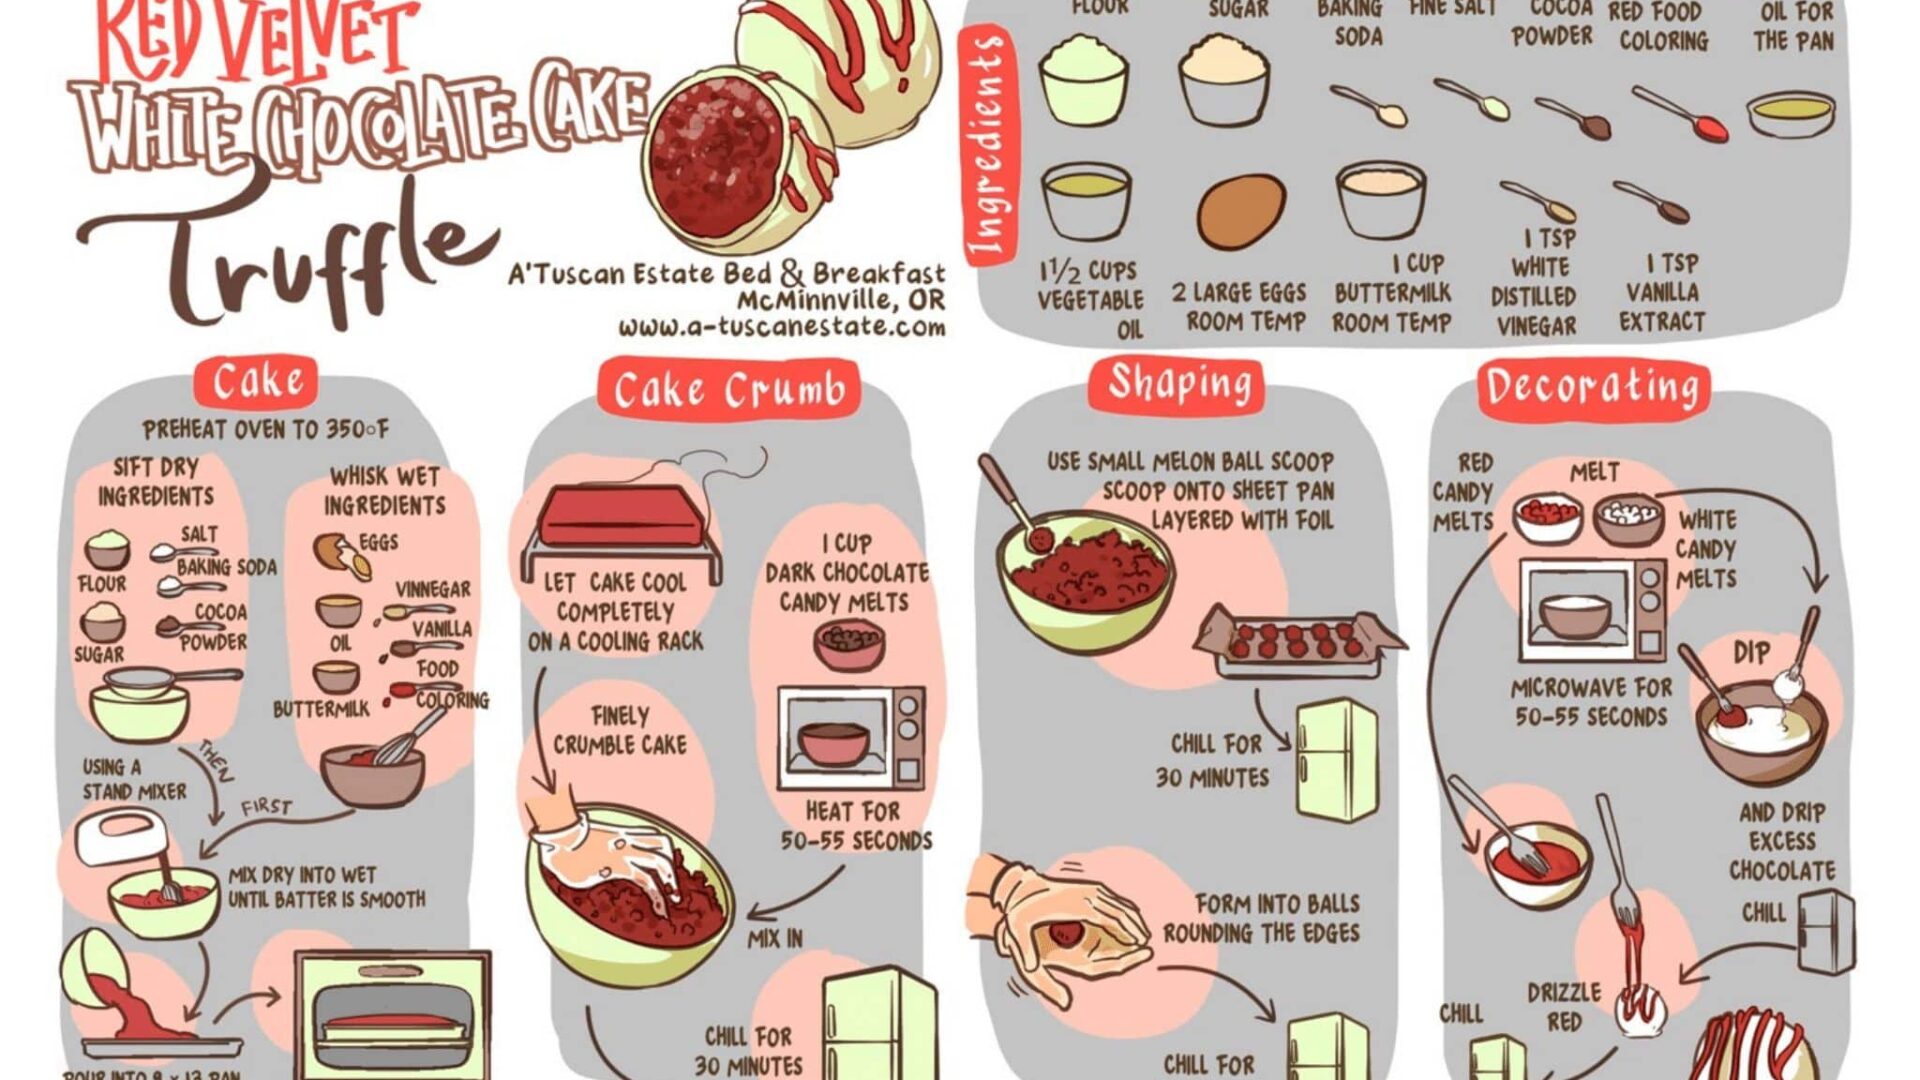 Red Velvet White Chocolate Cake Truffle Recipe Card